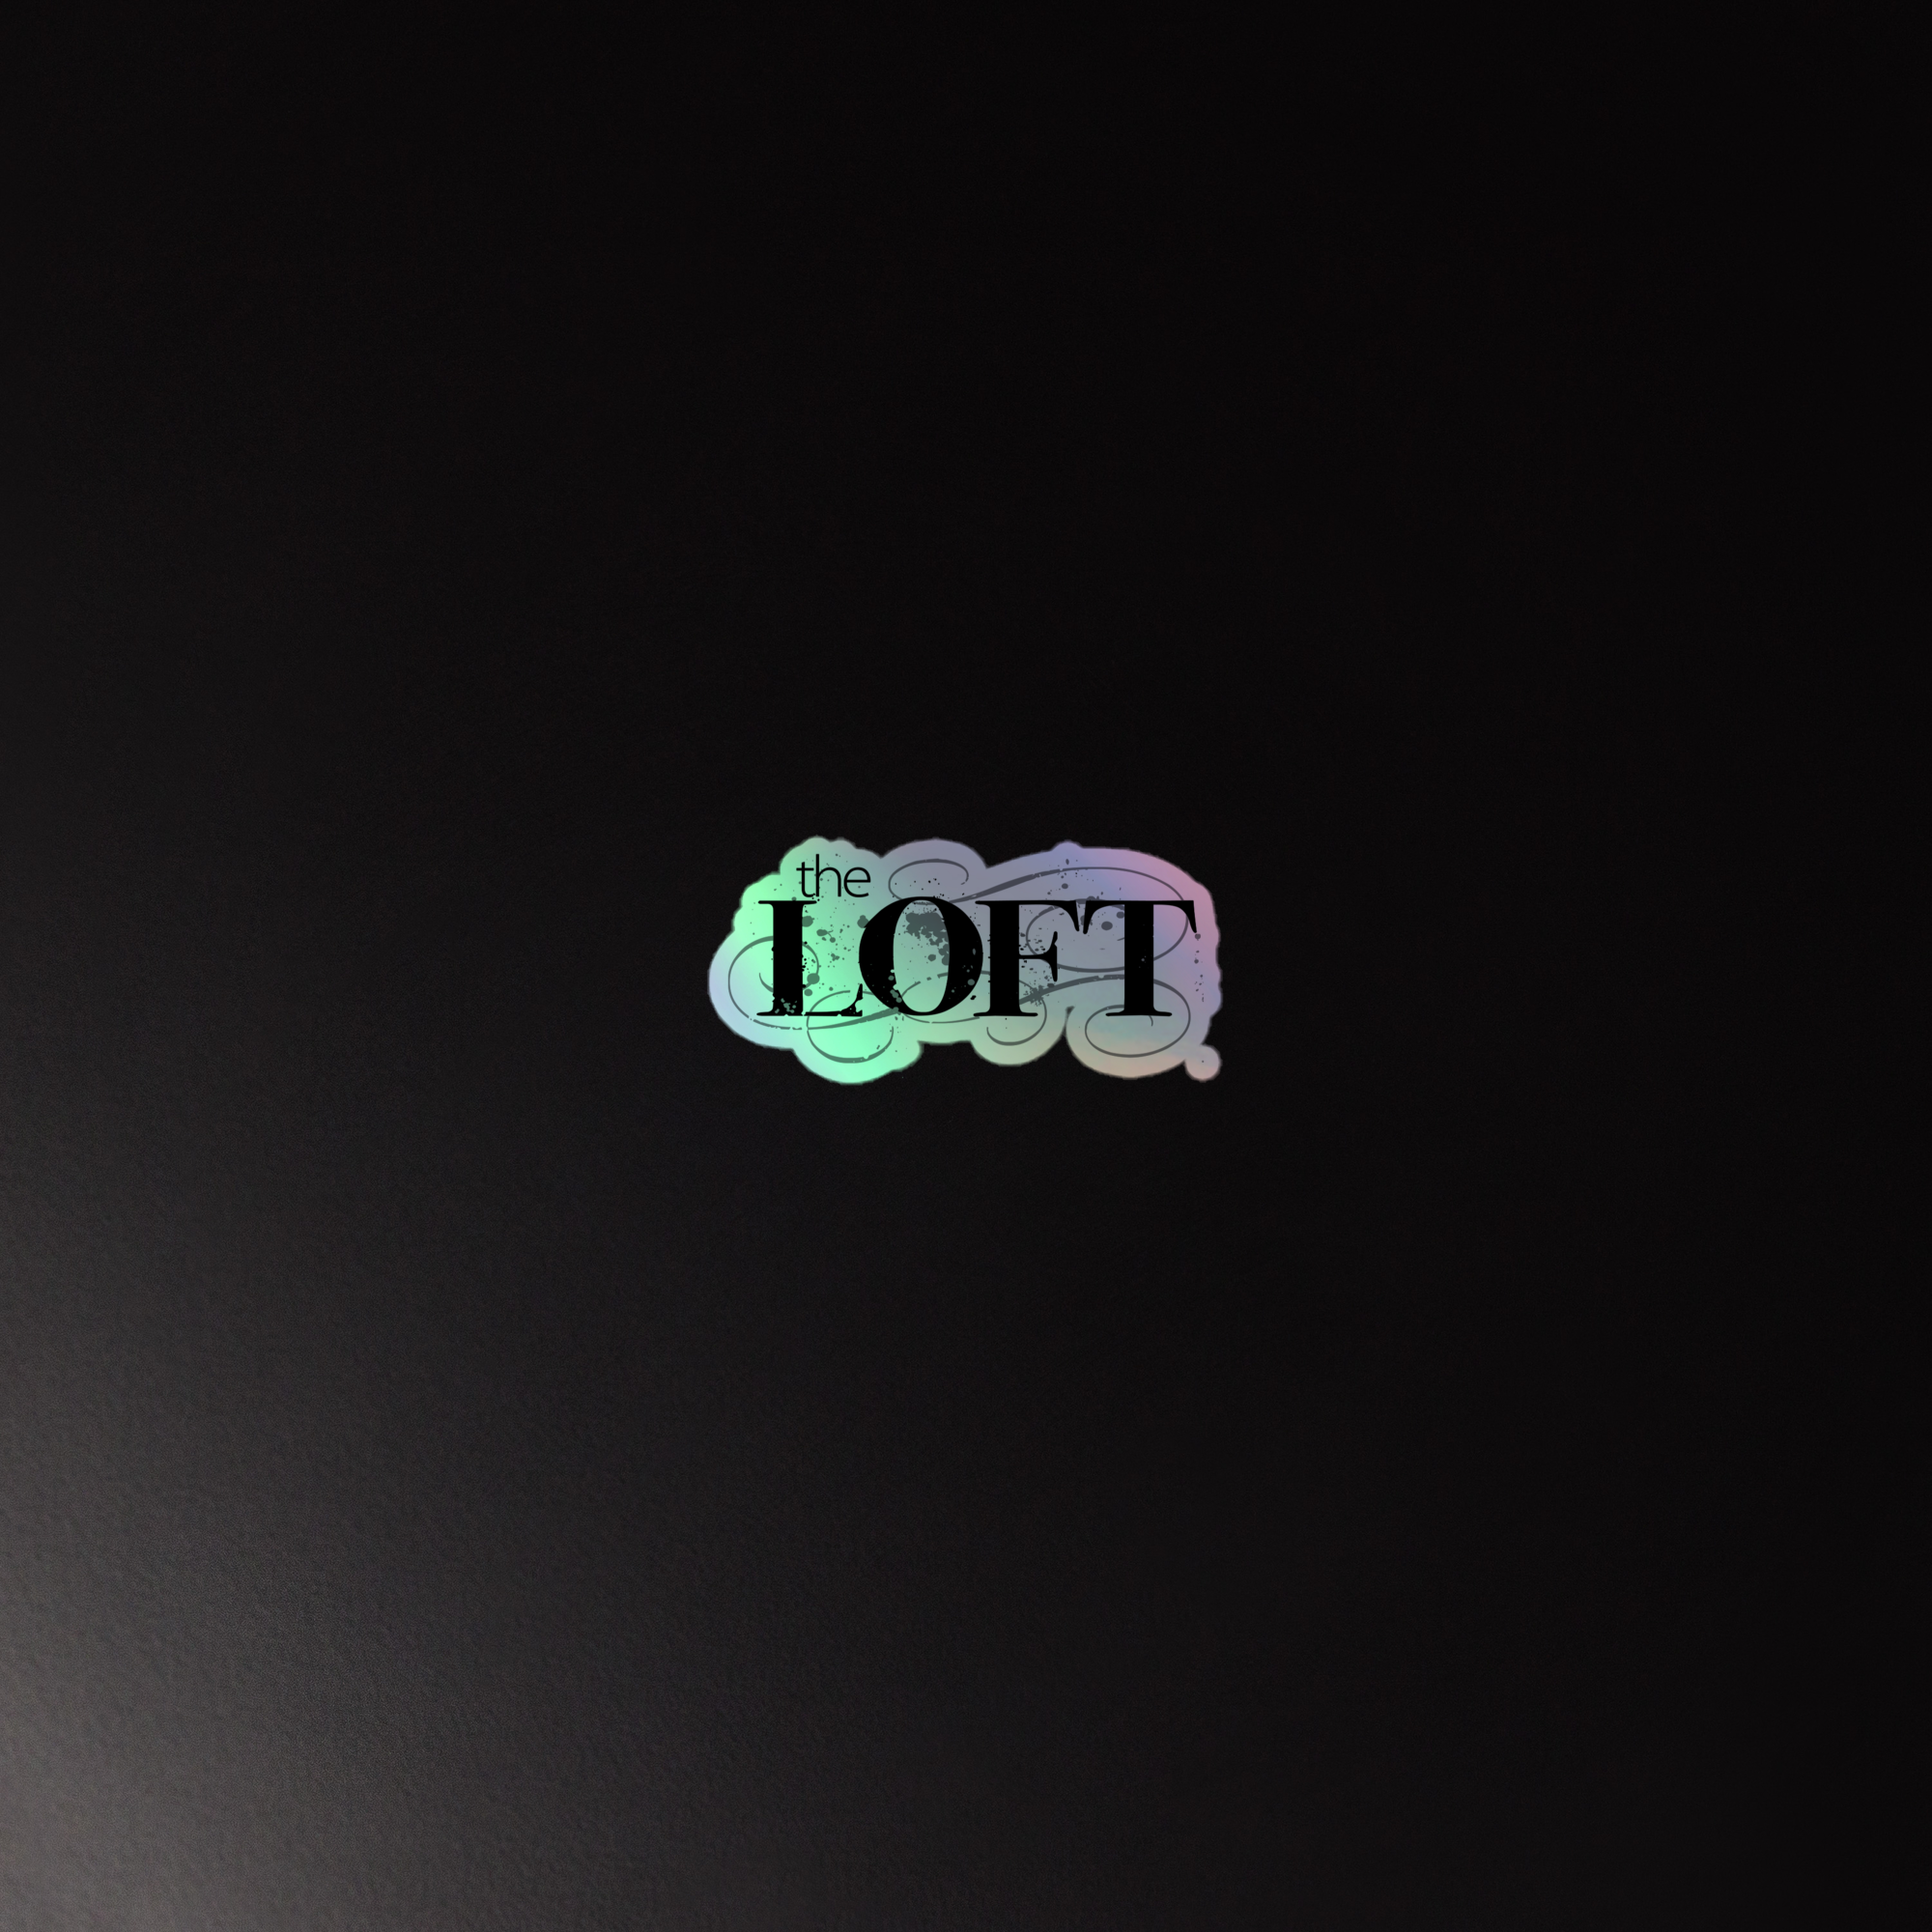 The Loft: Holographic Sticker